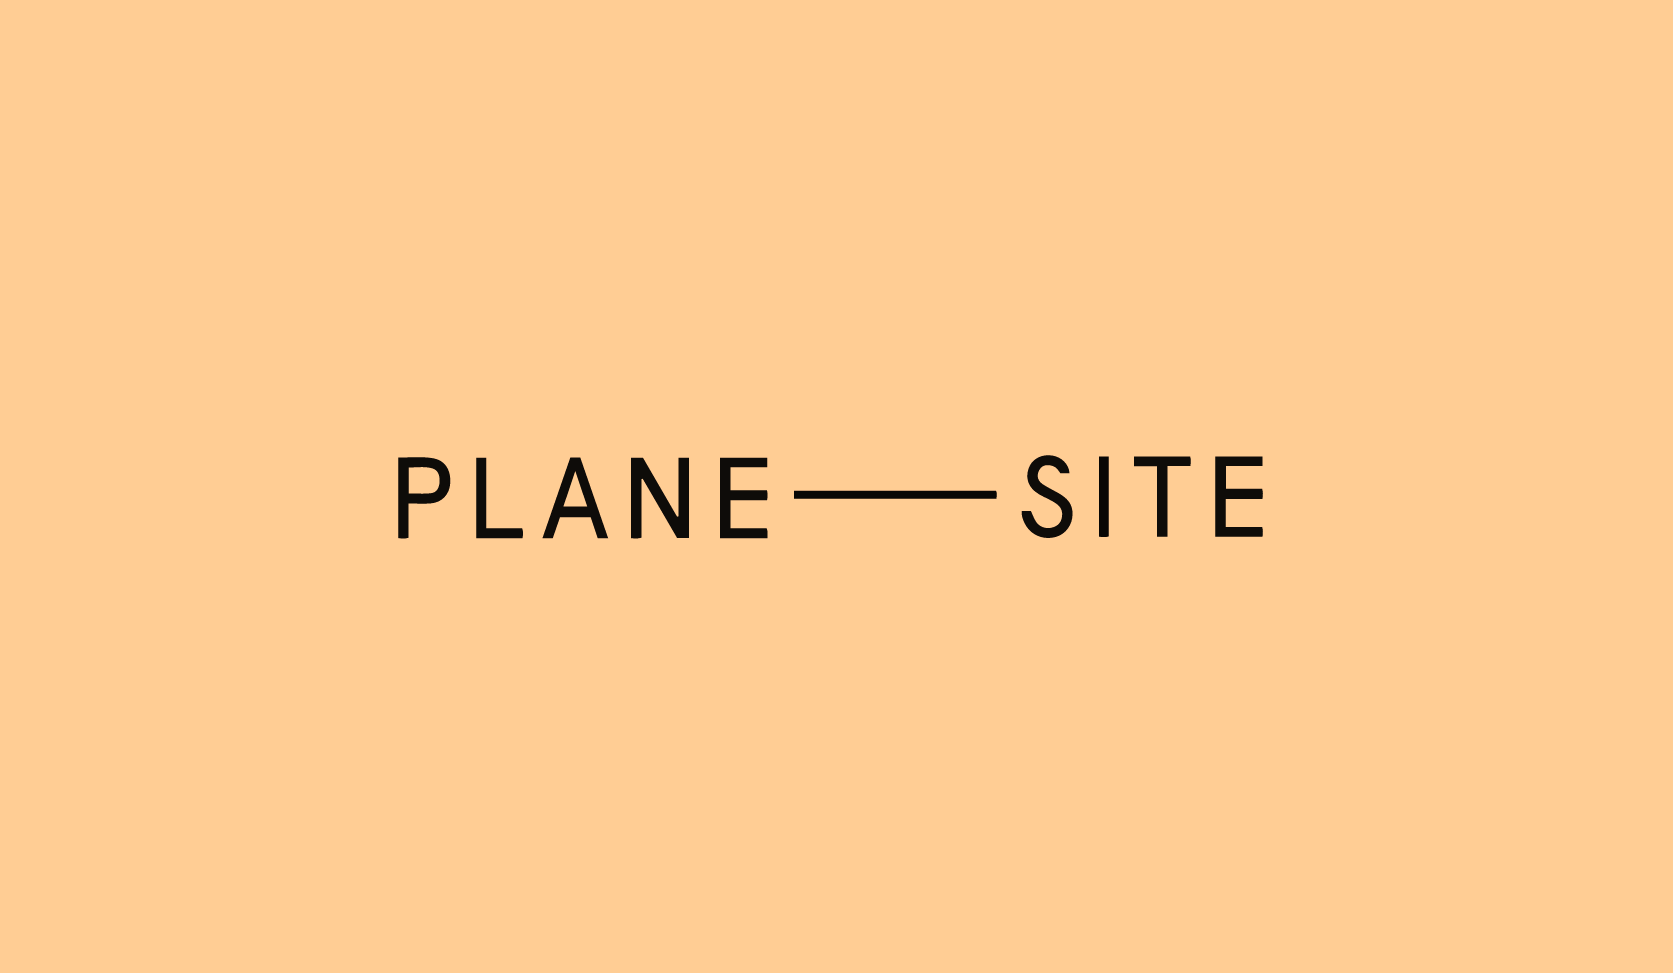 Plane—Site